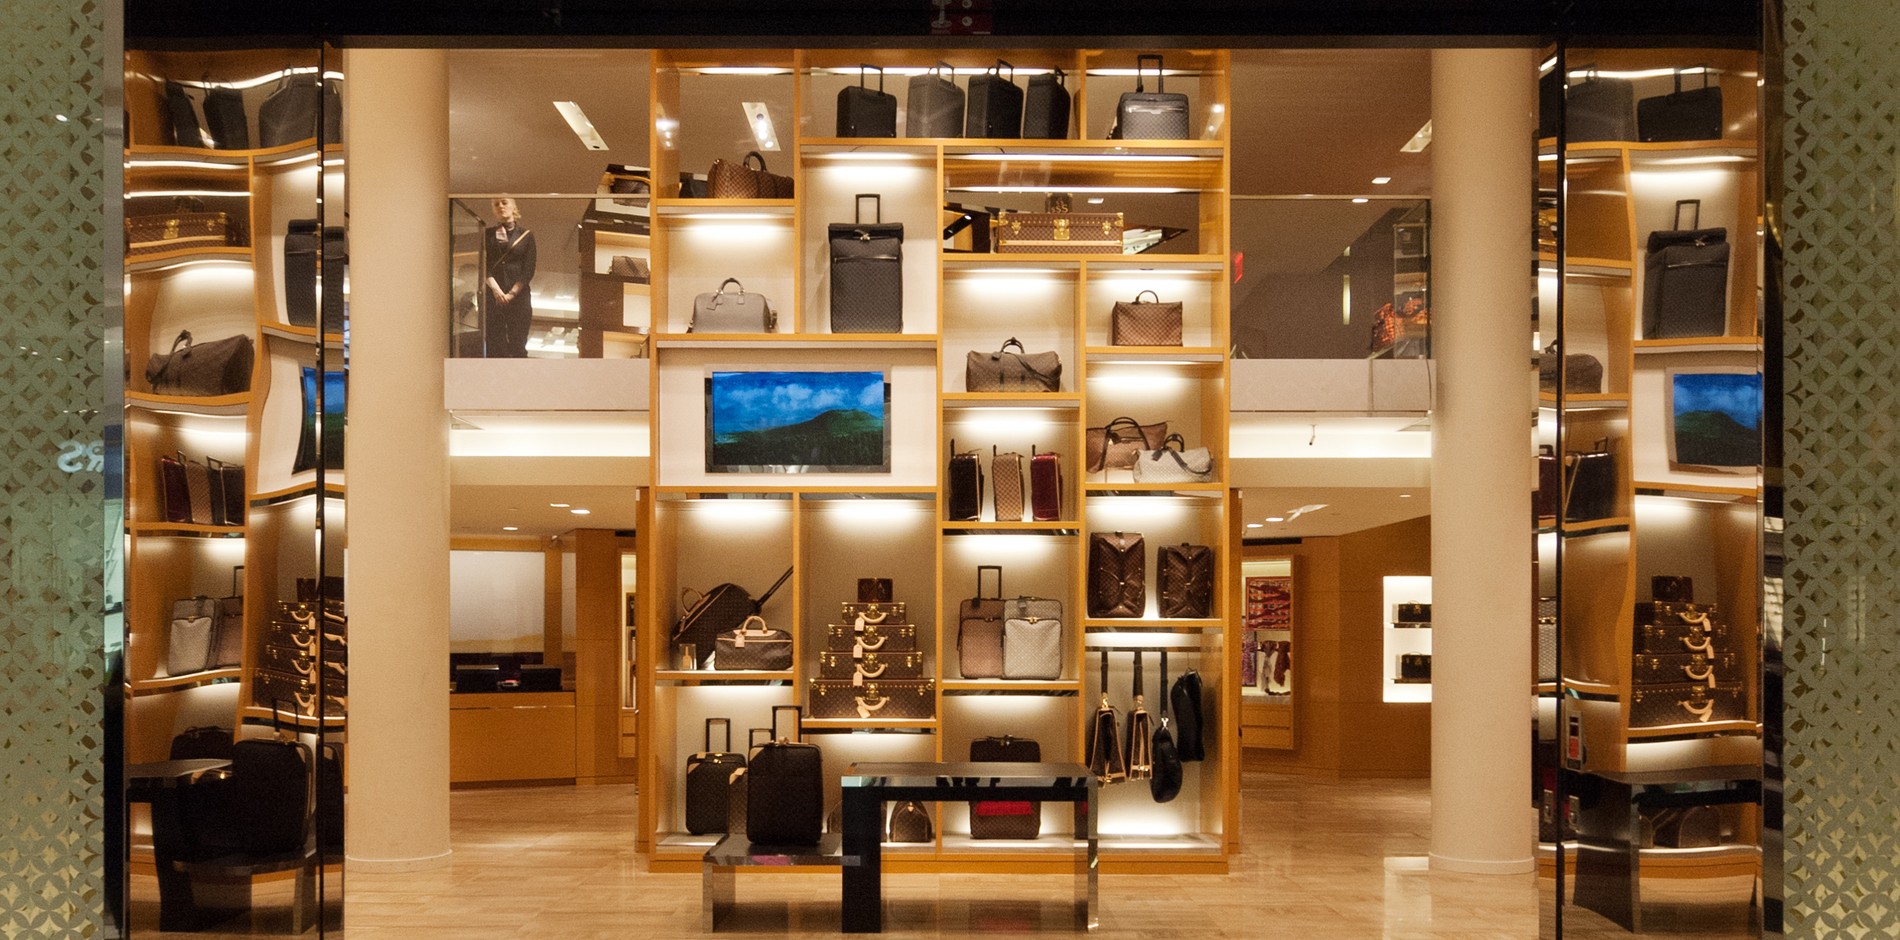 Louis Vuitton New York Macy's Herald Sq. New York Ny